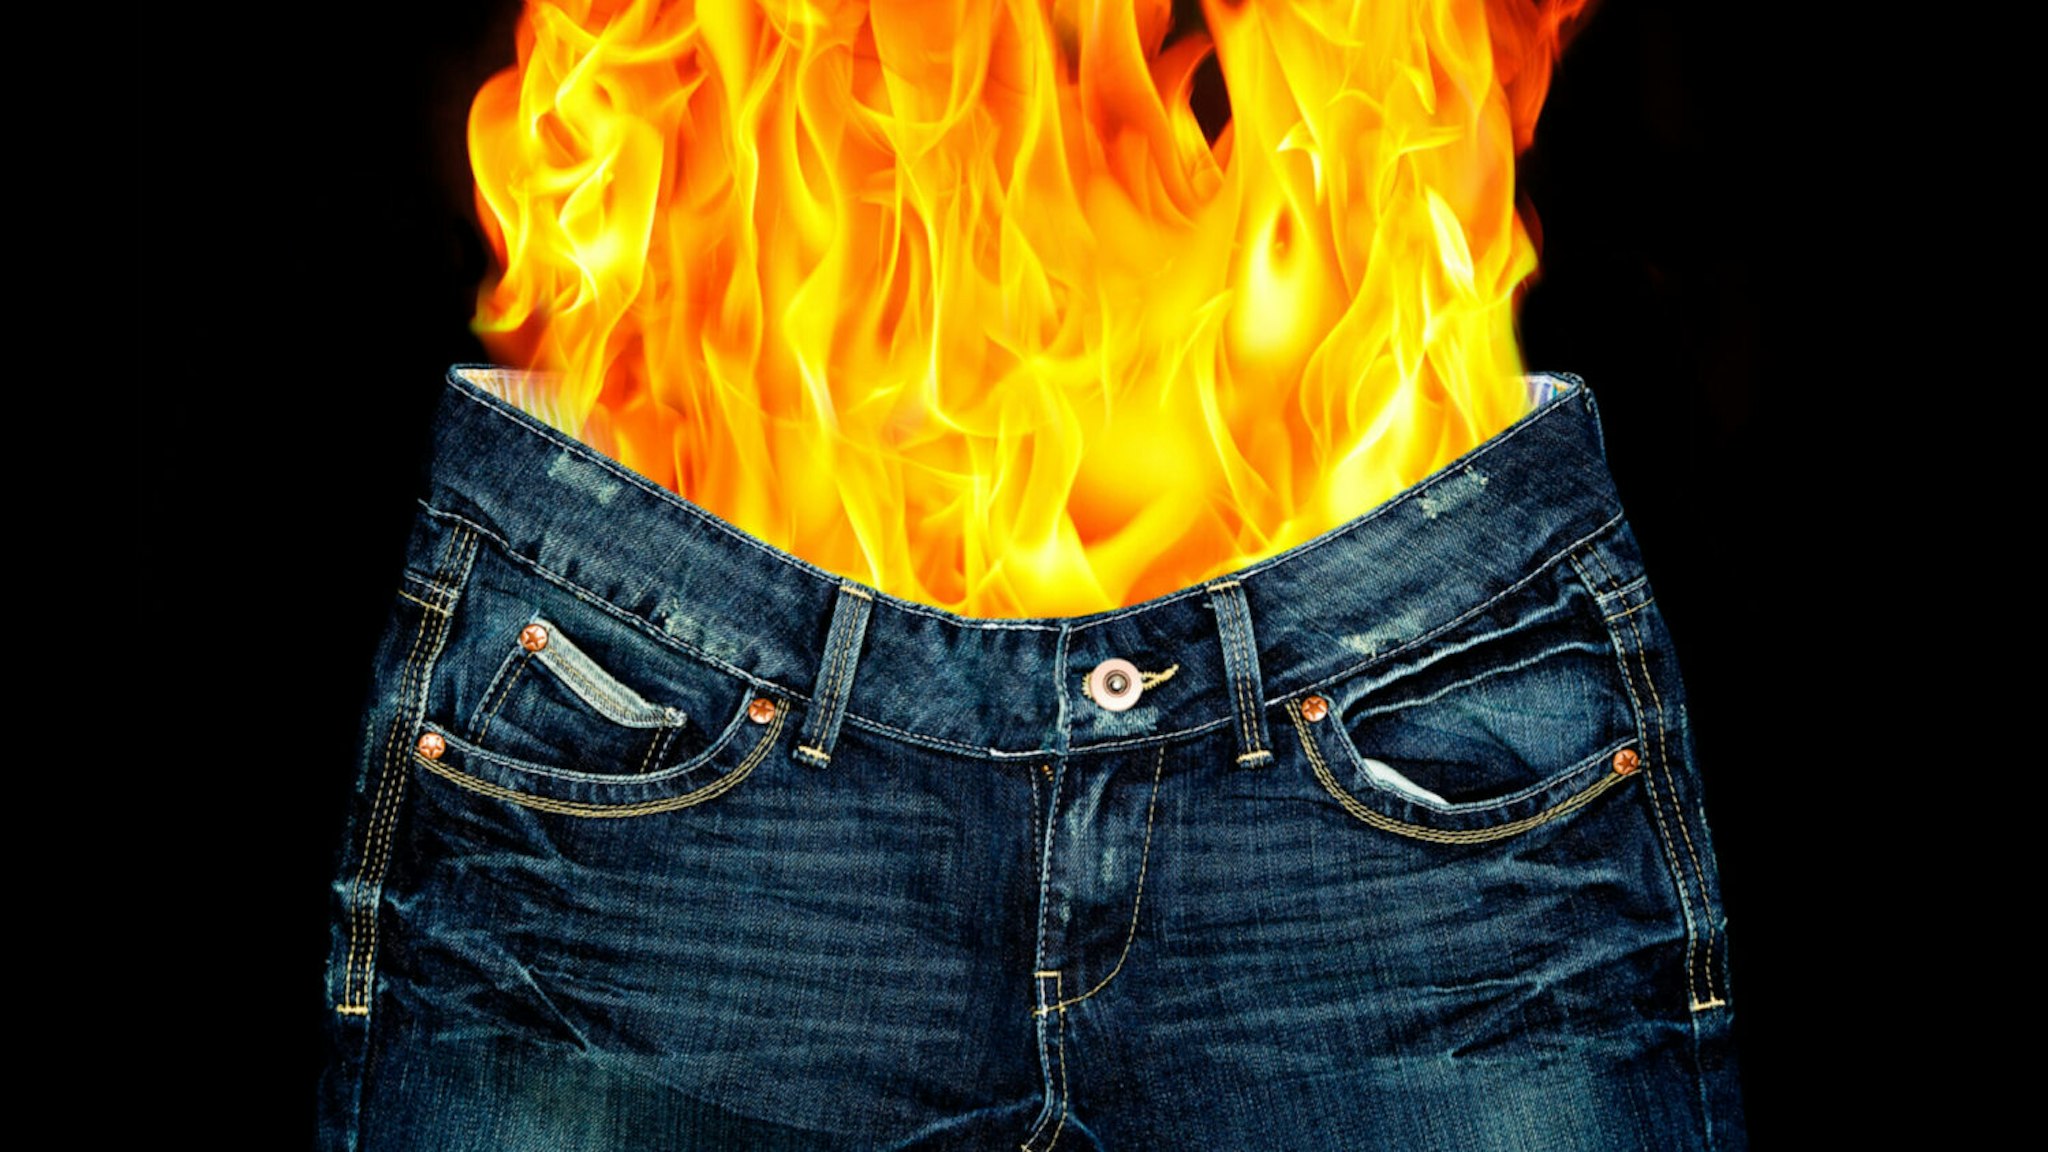 Pants on fire.